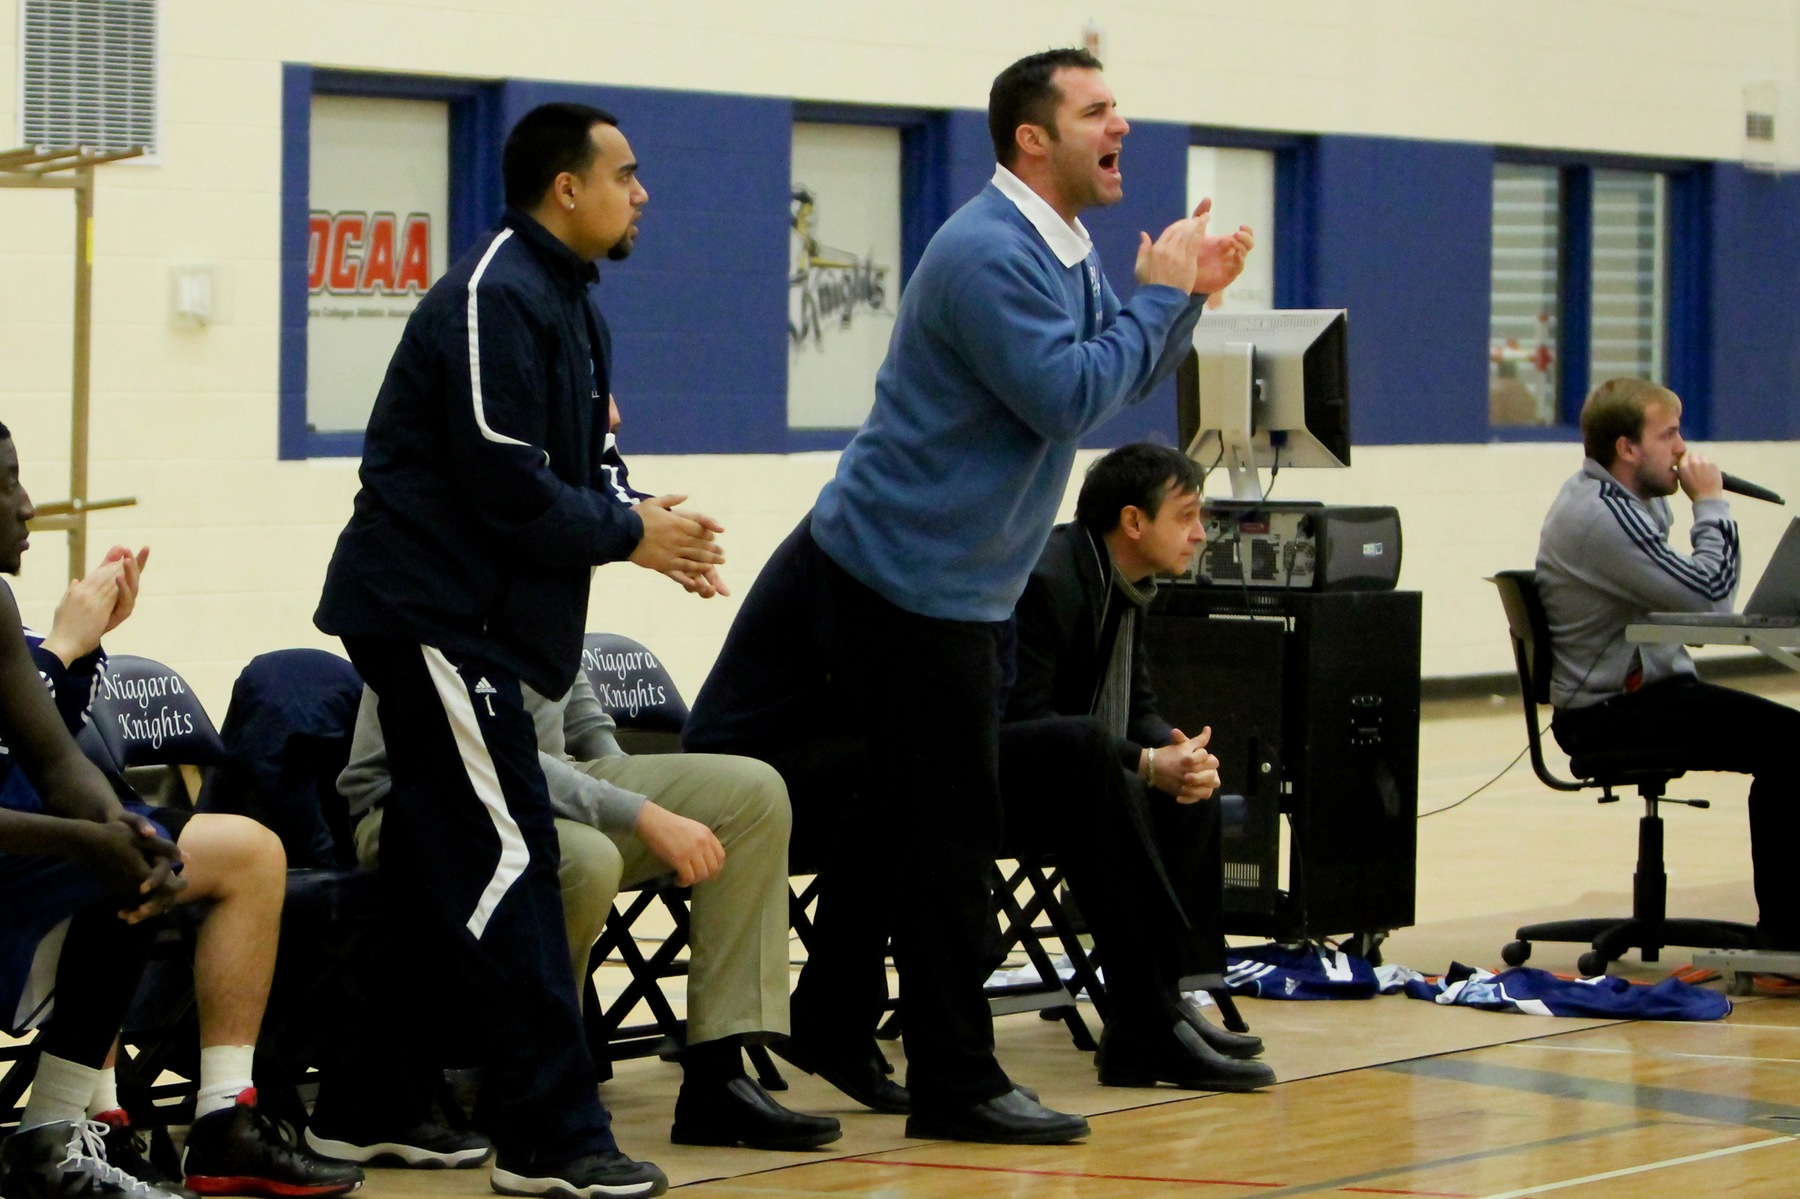 NEWS: Mike Hurley named Interim head coach of Niagara Knights Men’s basketball program